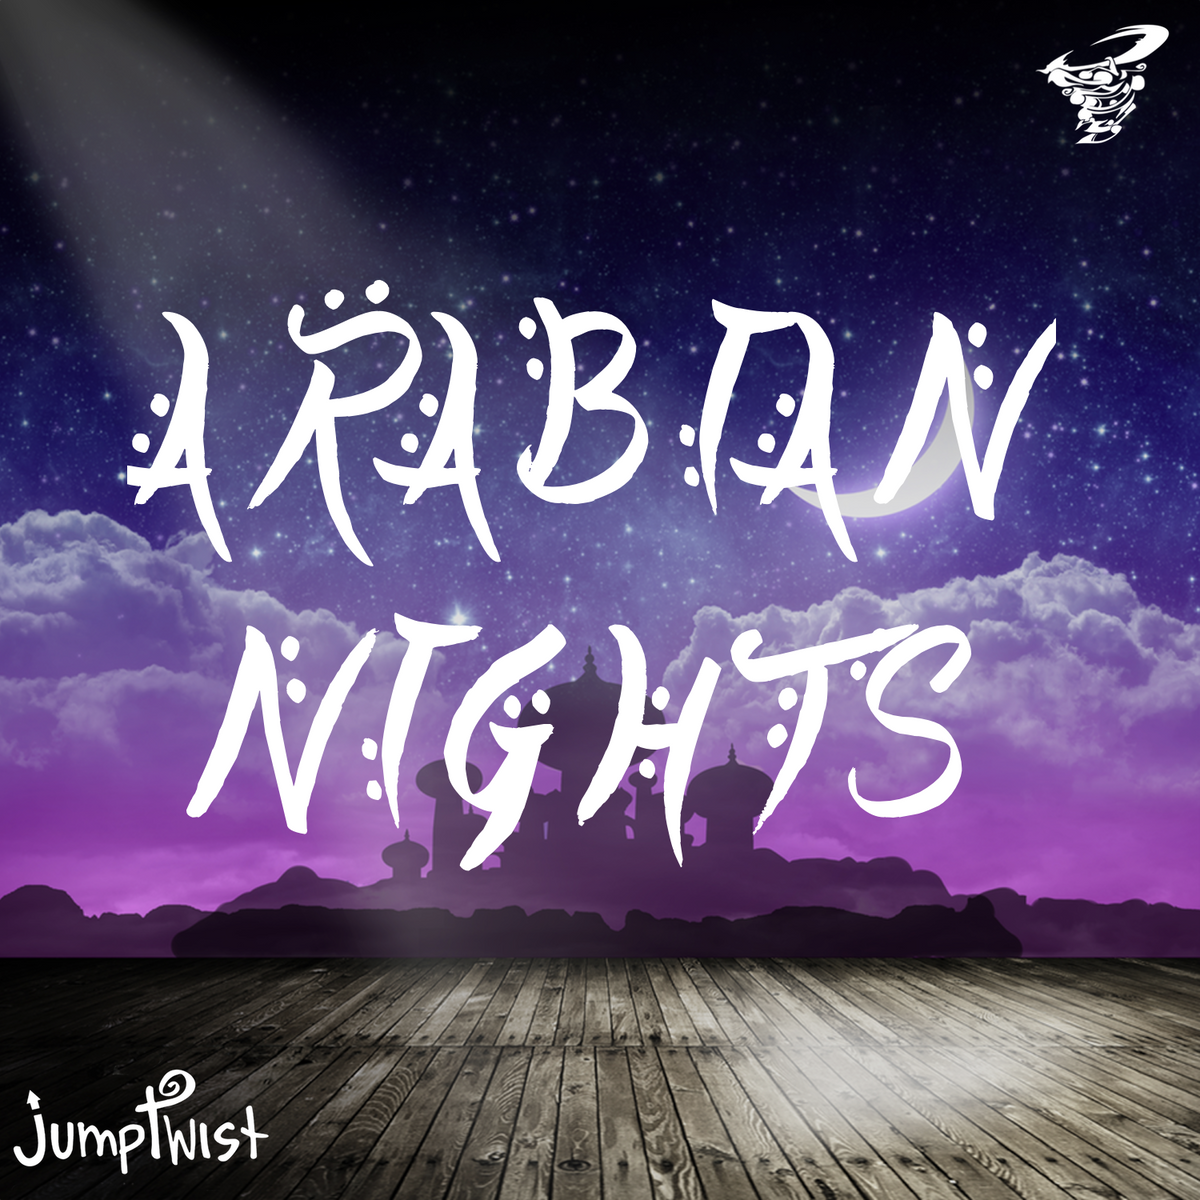 Arabian Nights by RudeLies + Facading on NCS